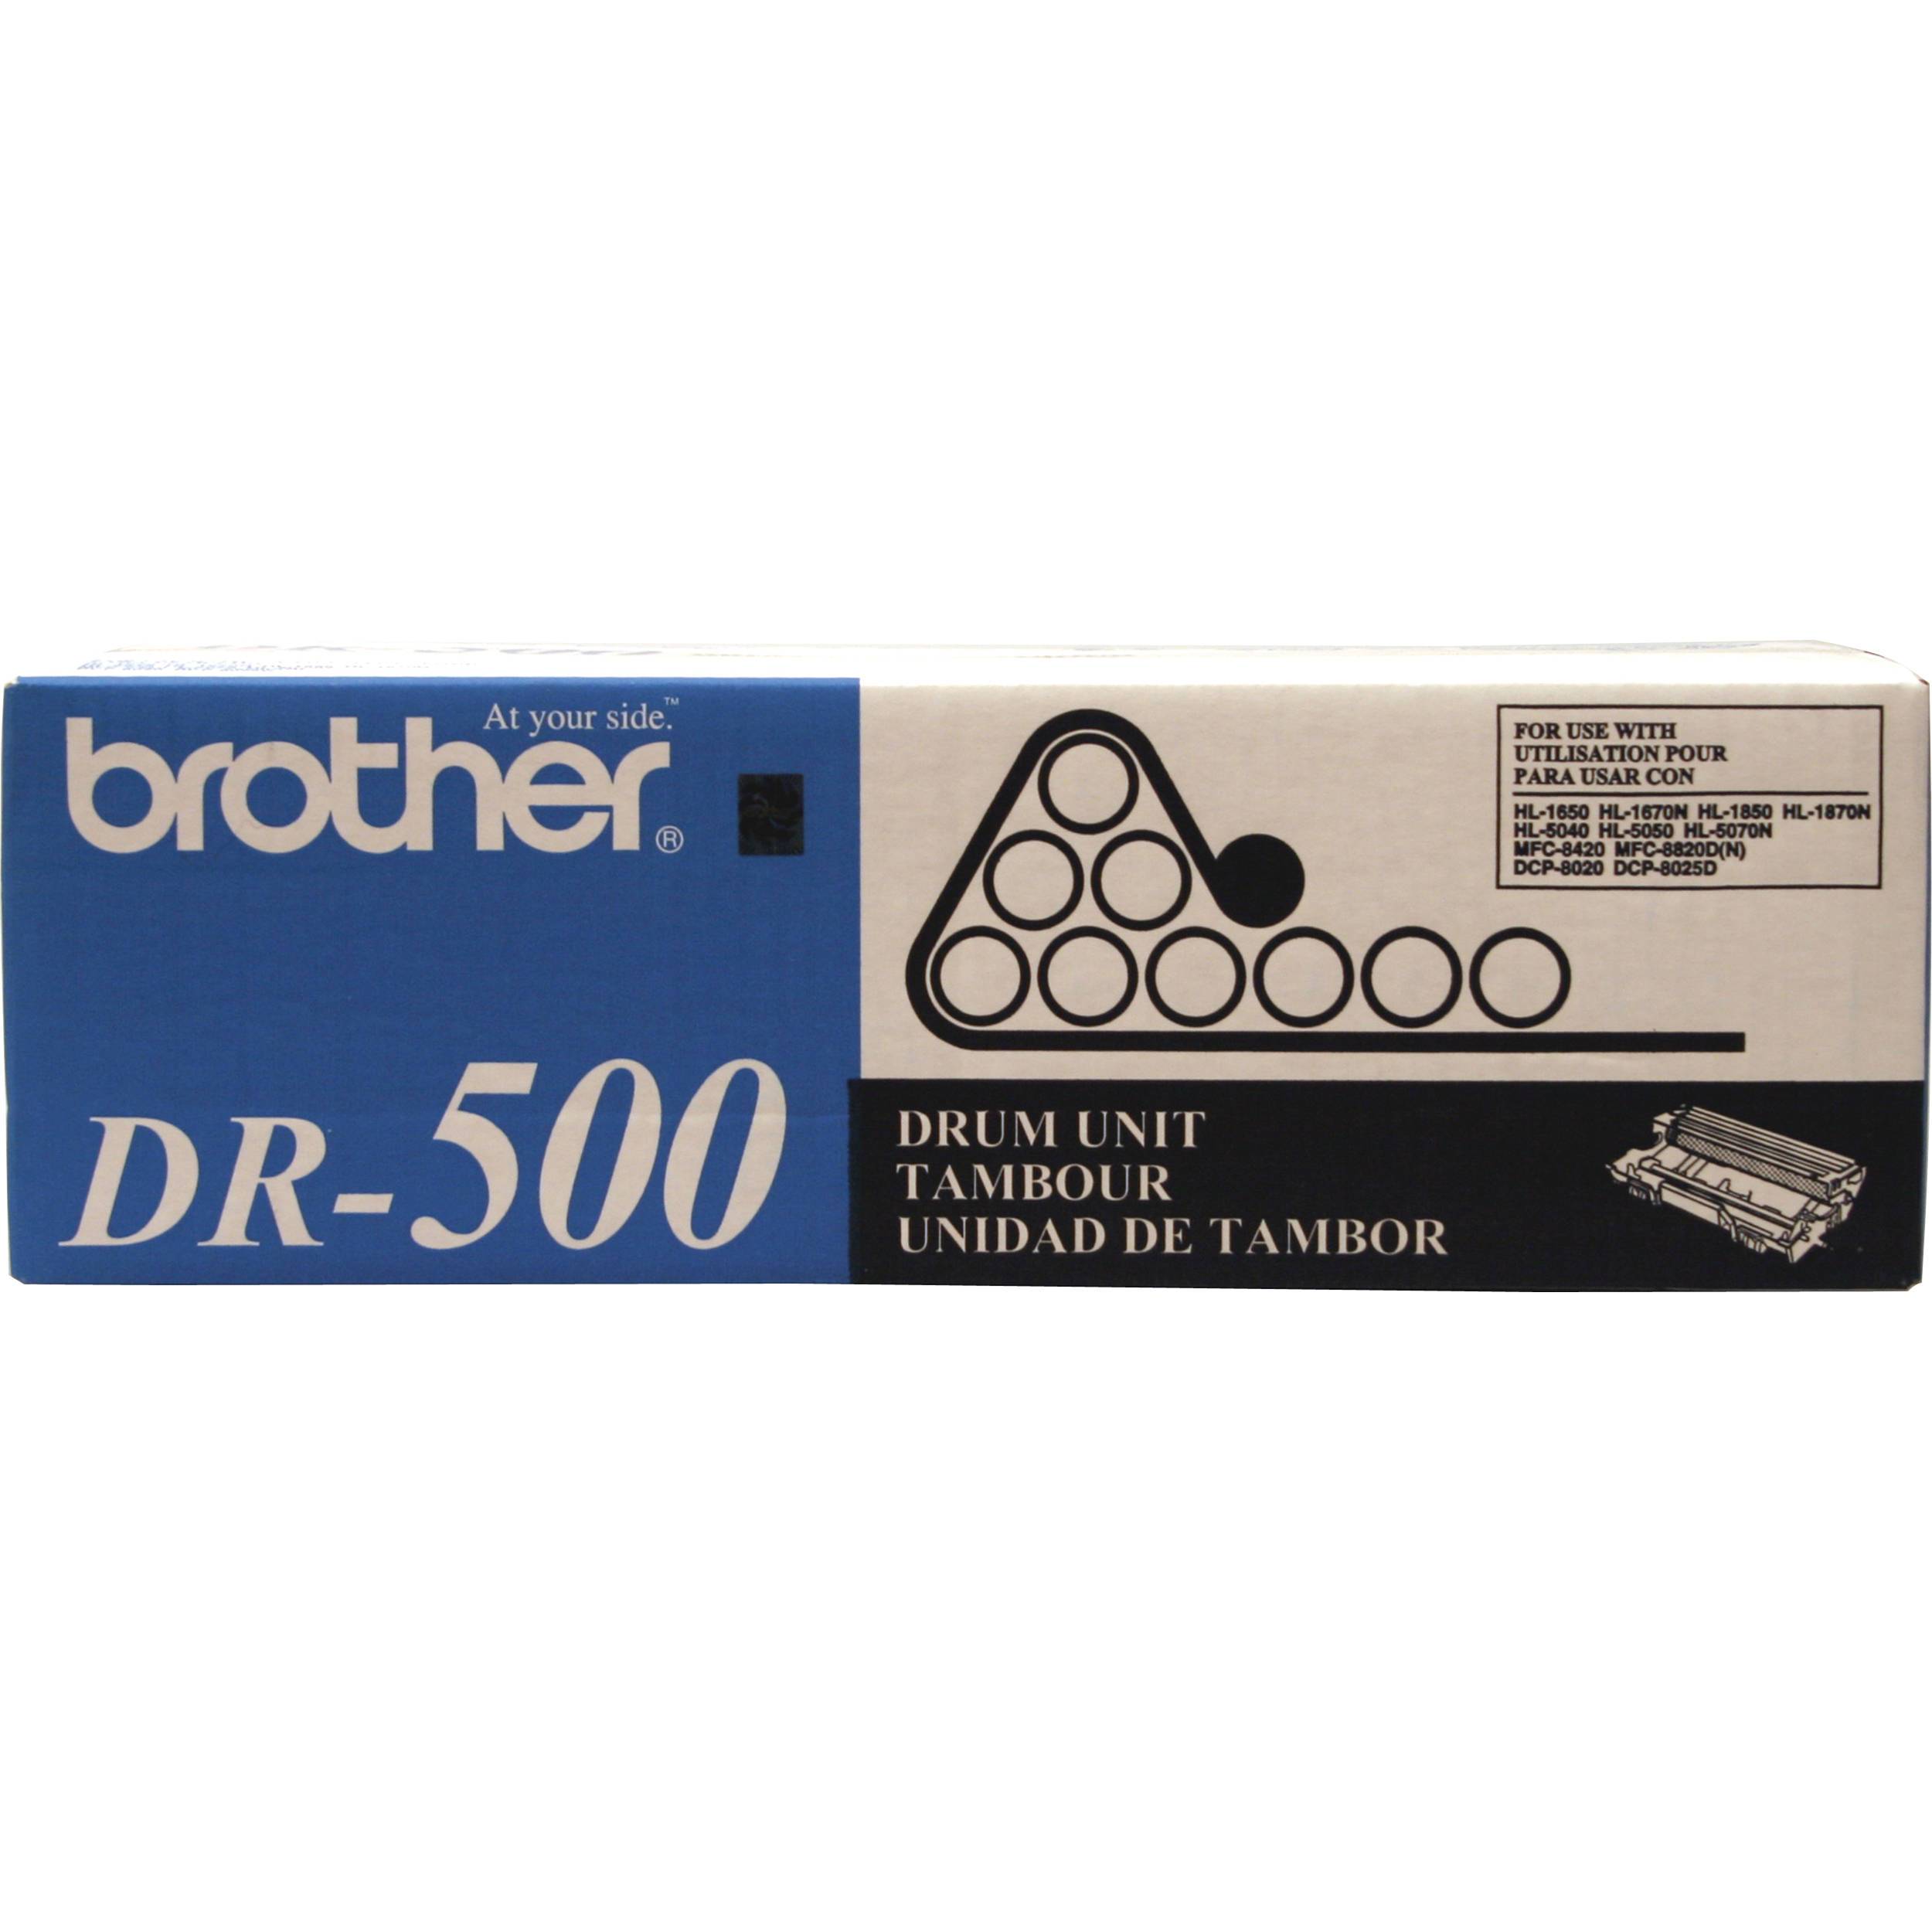 Absolute Toner Brother DR500 Original Genuine OEM Black Drum Unit Toner Cartridge Original Brother Cartridges